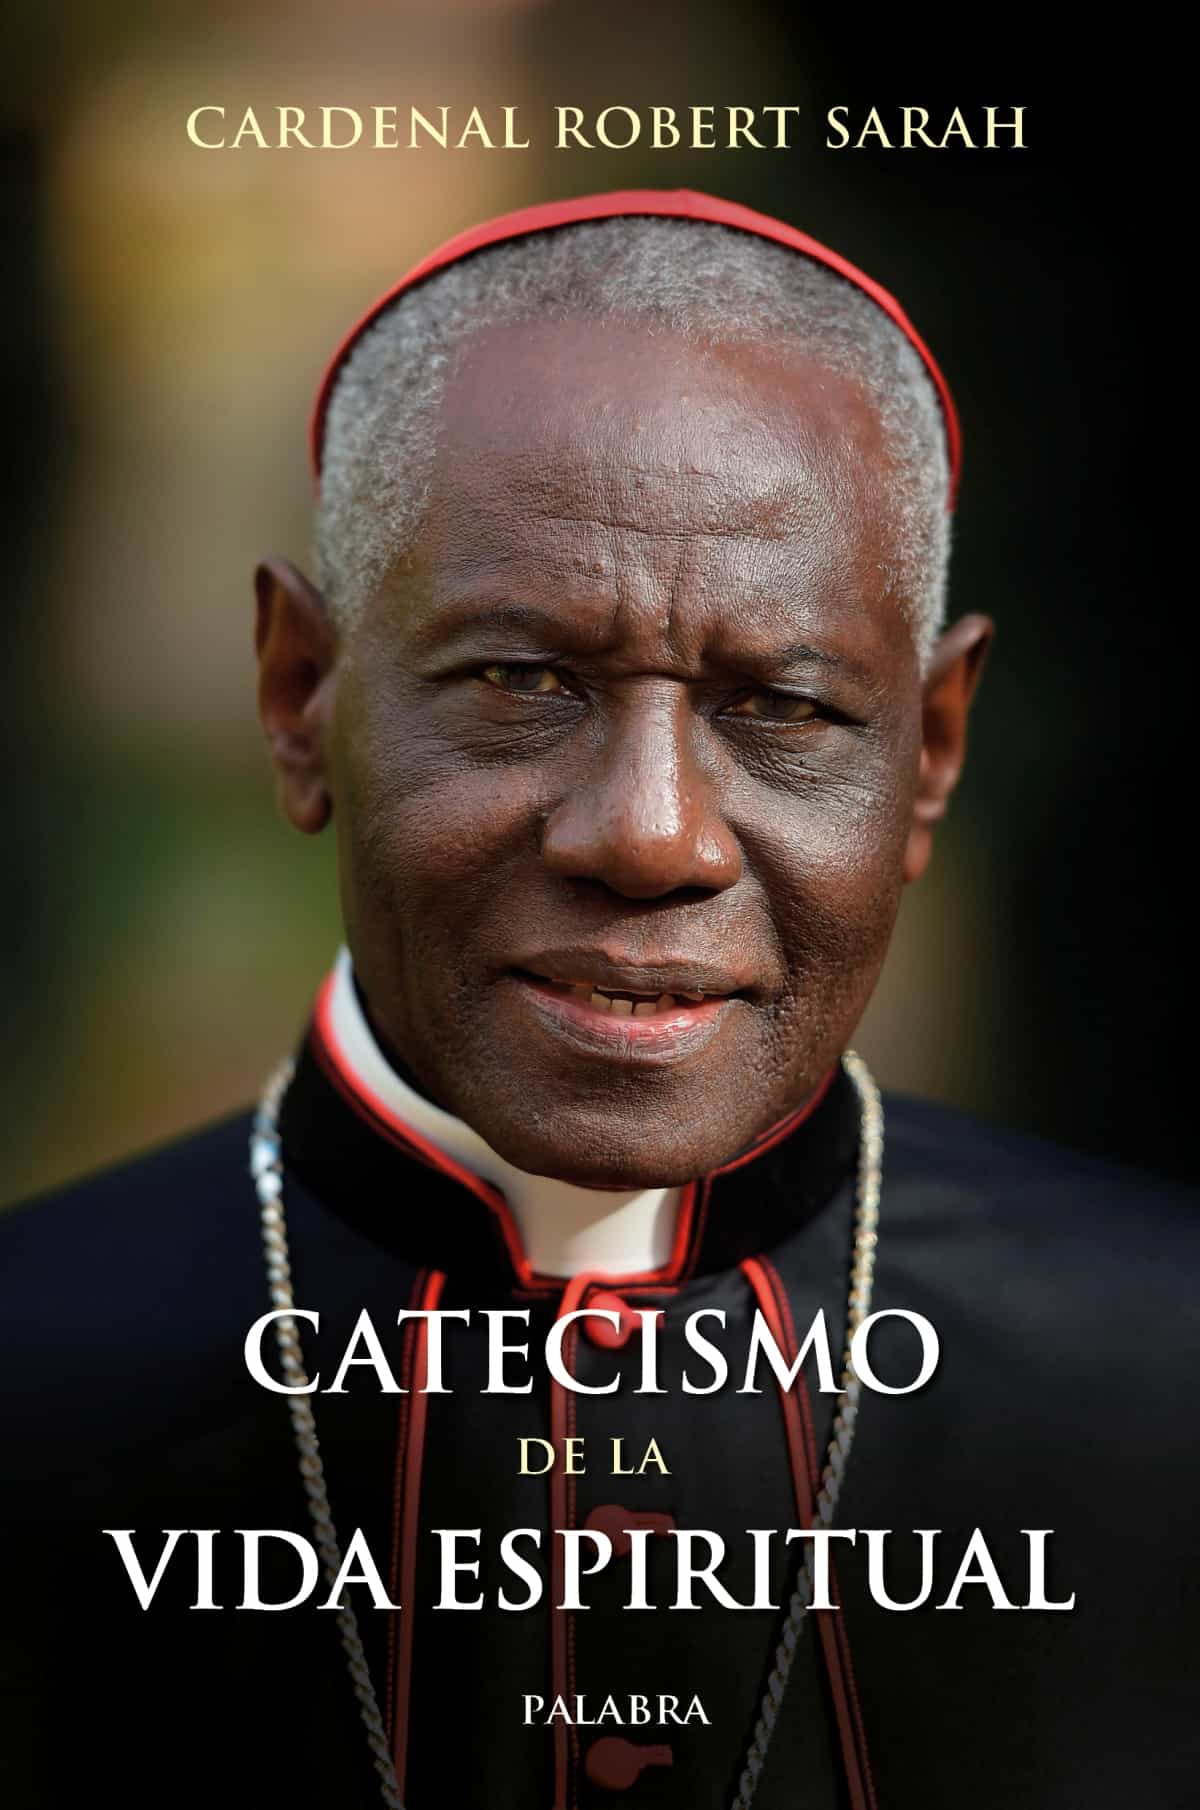 Catecismo de la vida espiritual (Palabra), del cardenal Robert Sarah. 